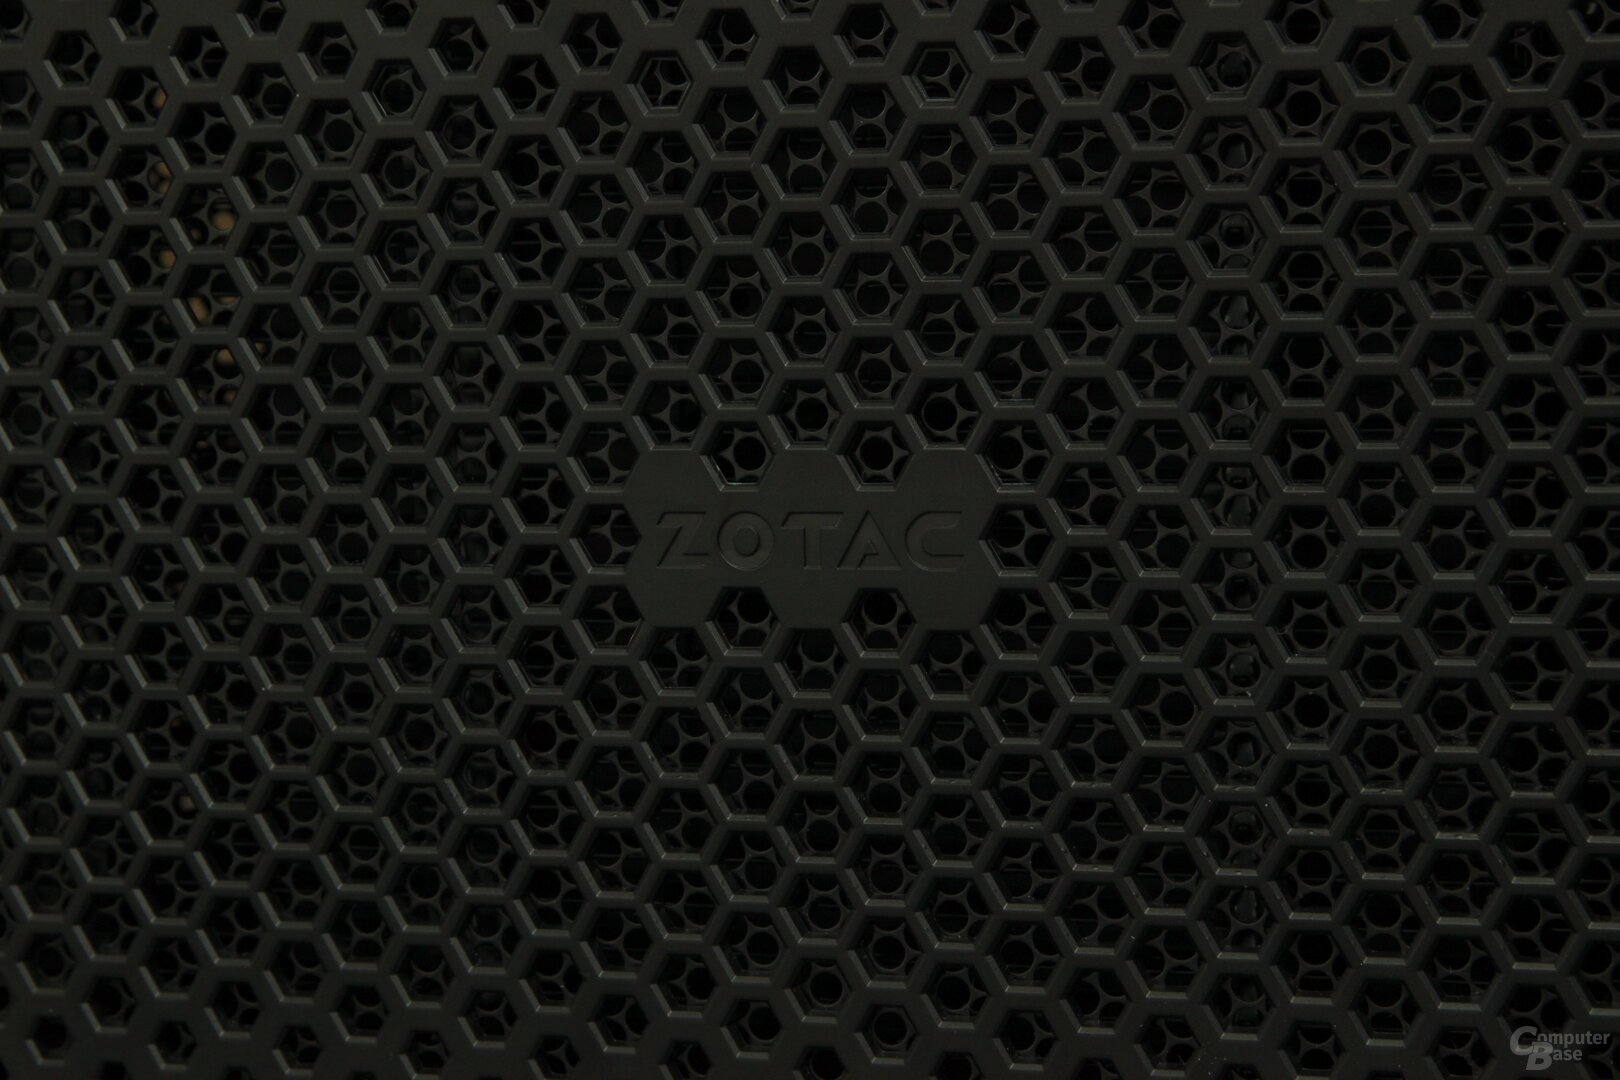 Zotac Zbox CA621 nano